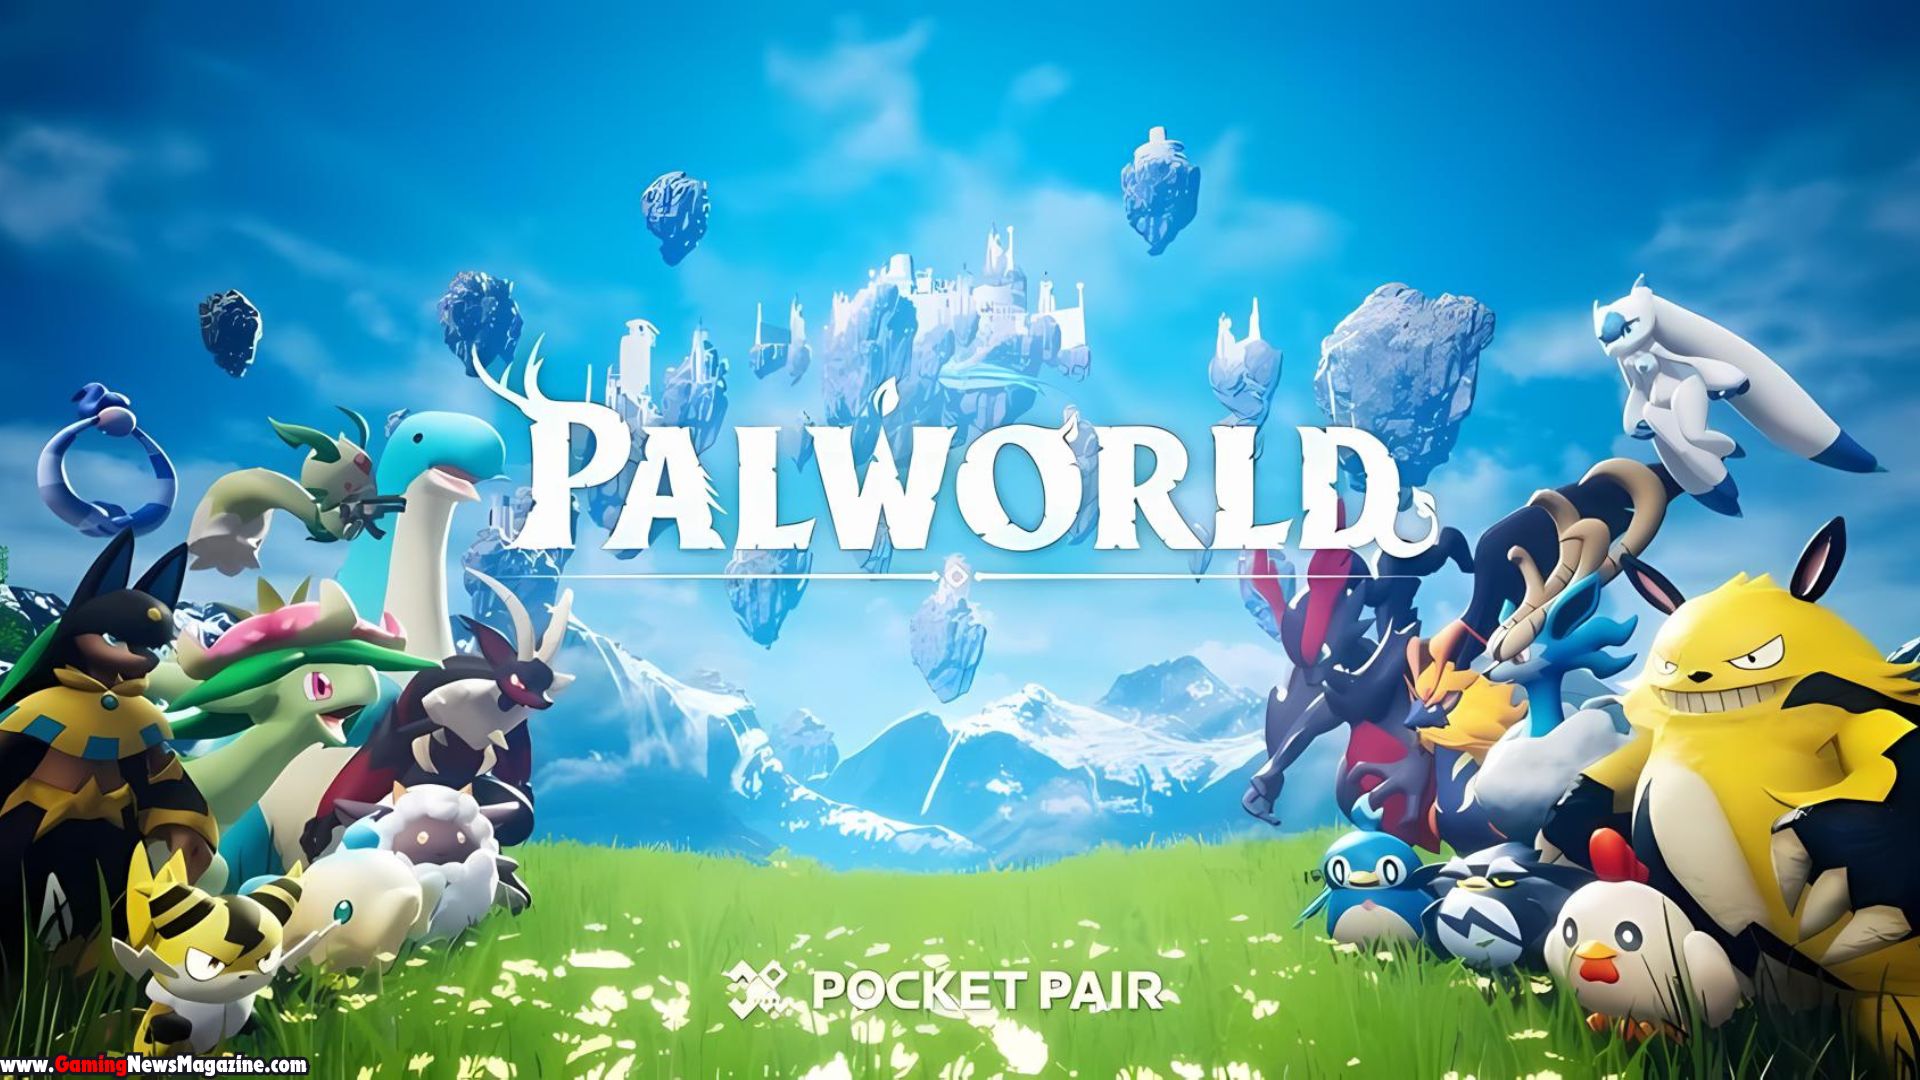 New Palworld Update